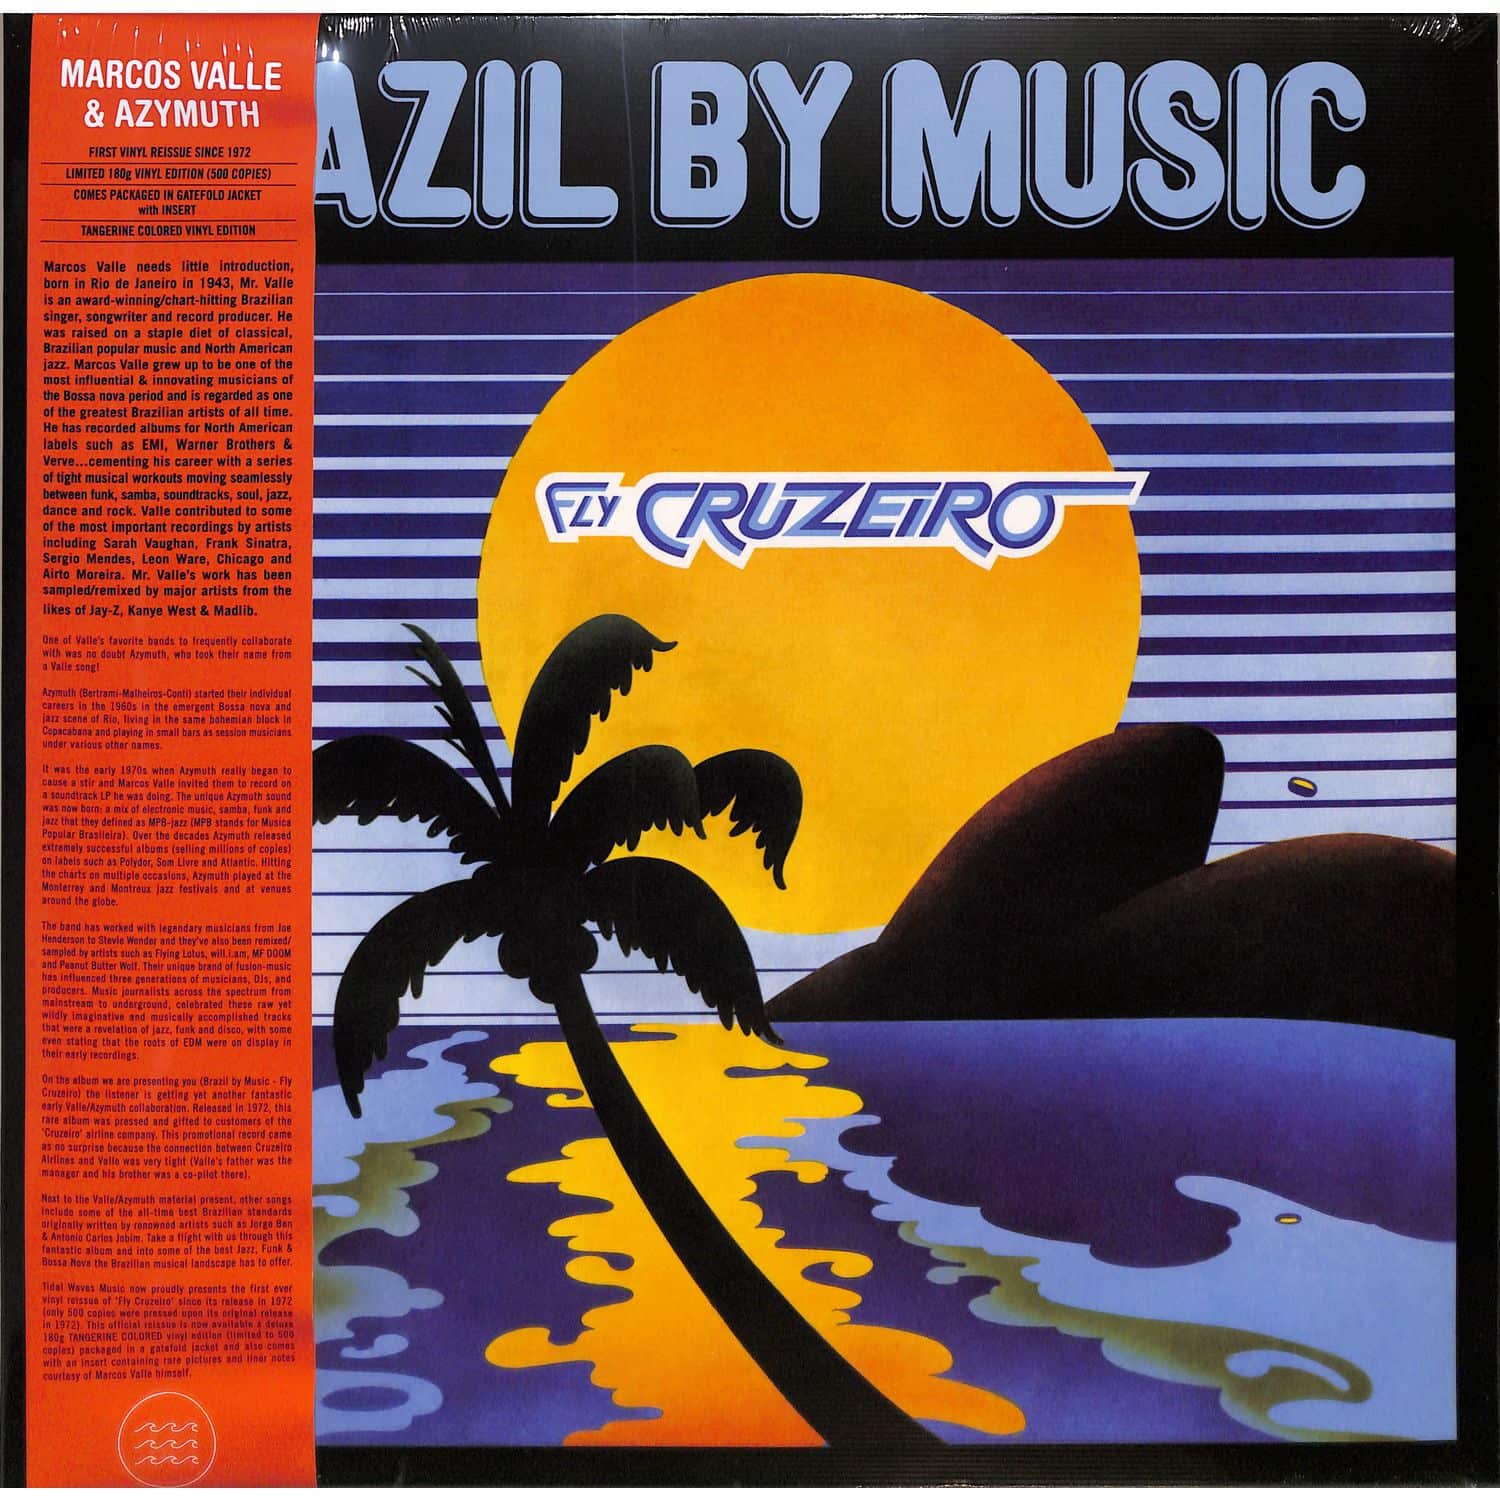 Marcos Valle & Azymuth - FLY CRUZEIRO 